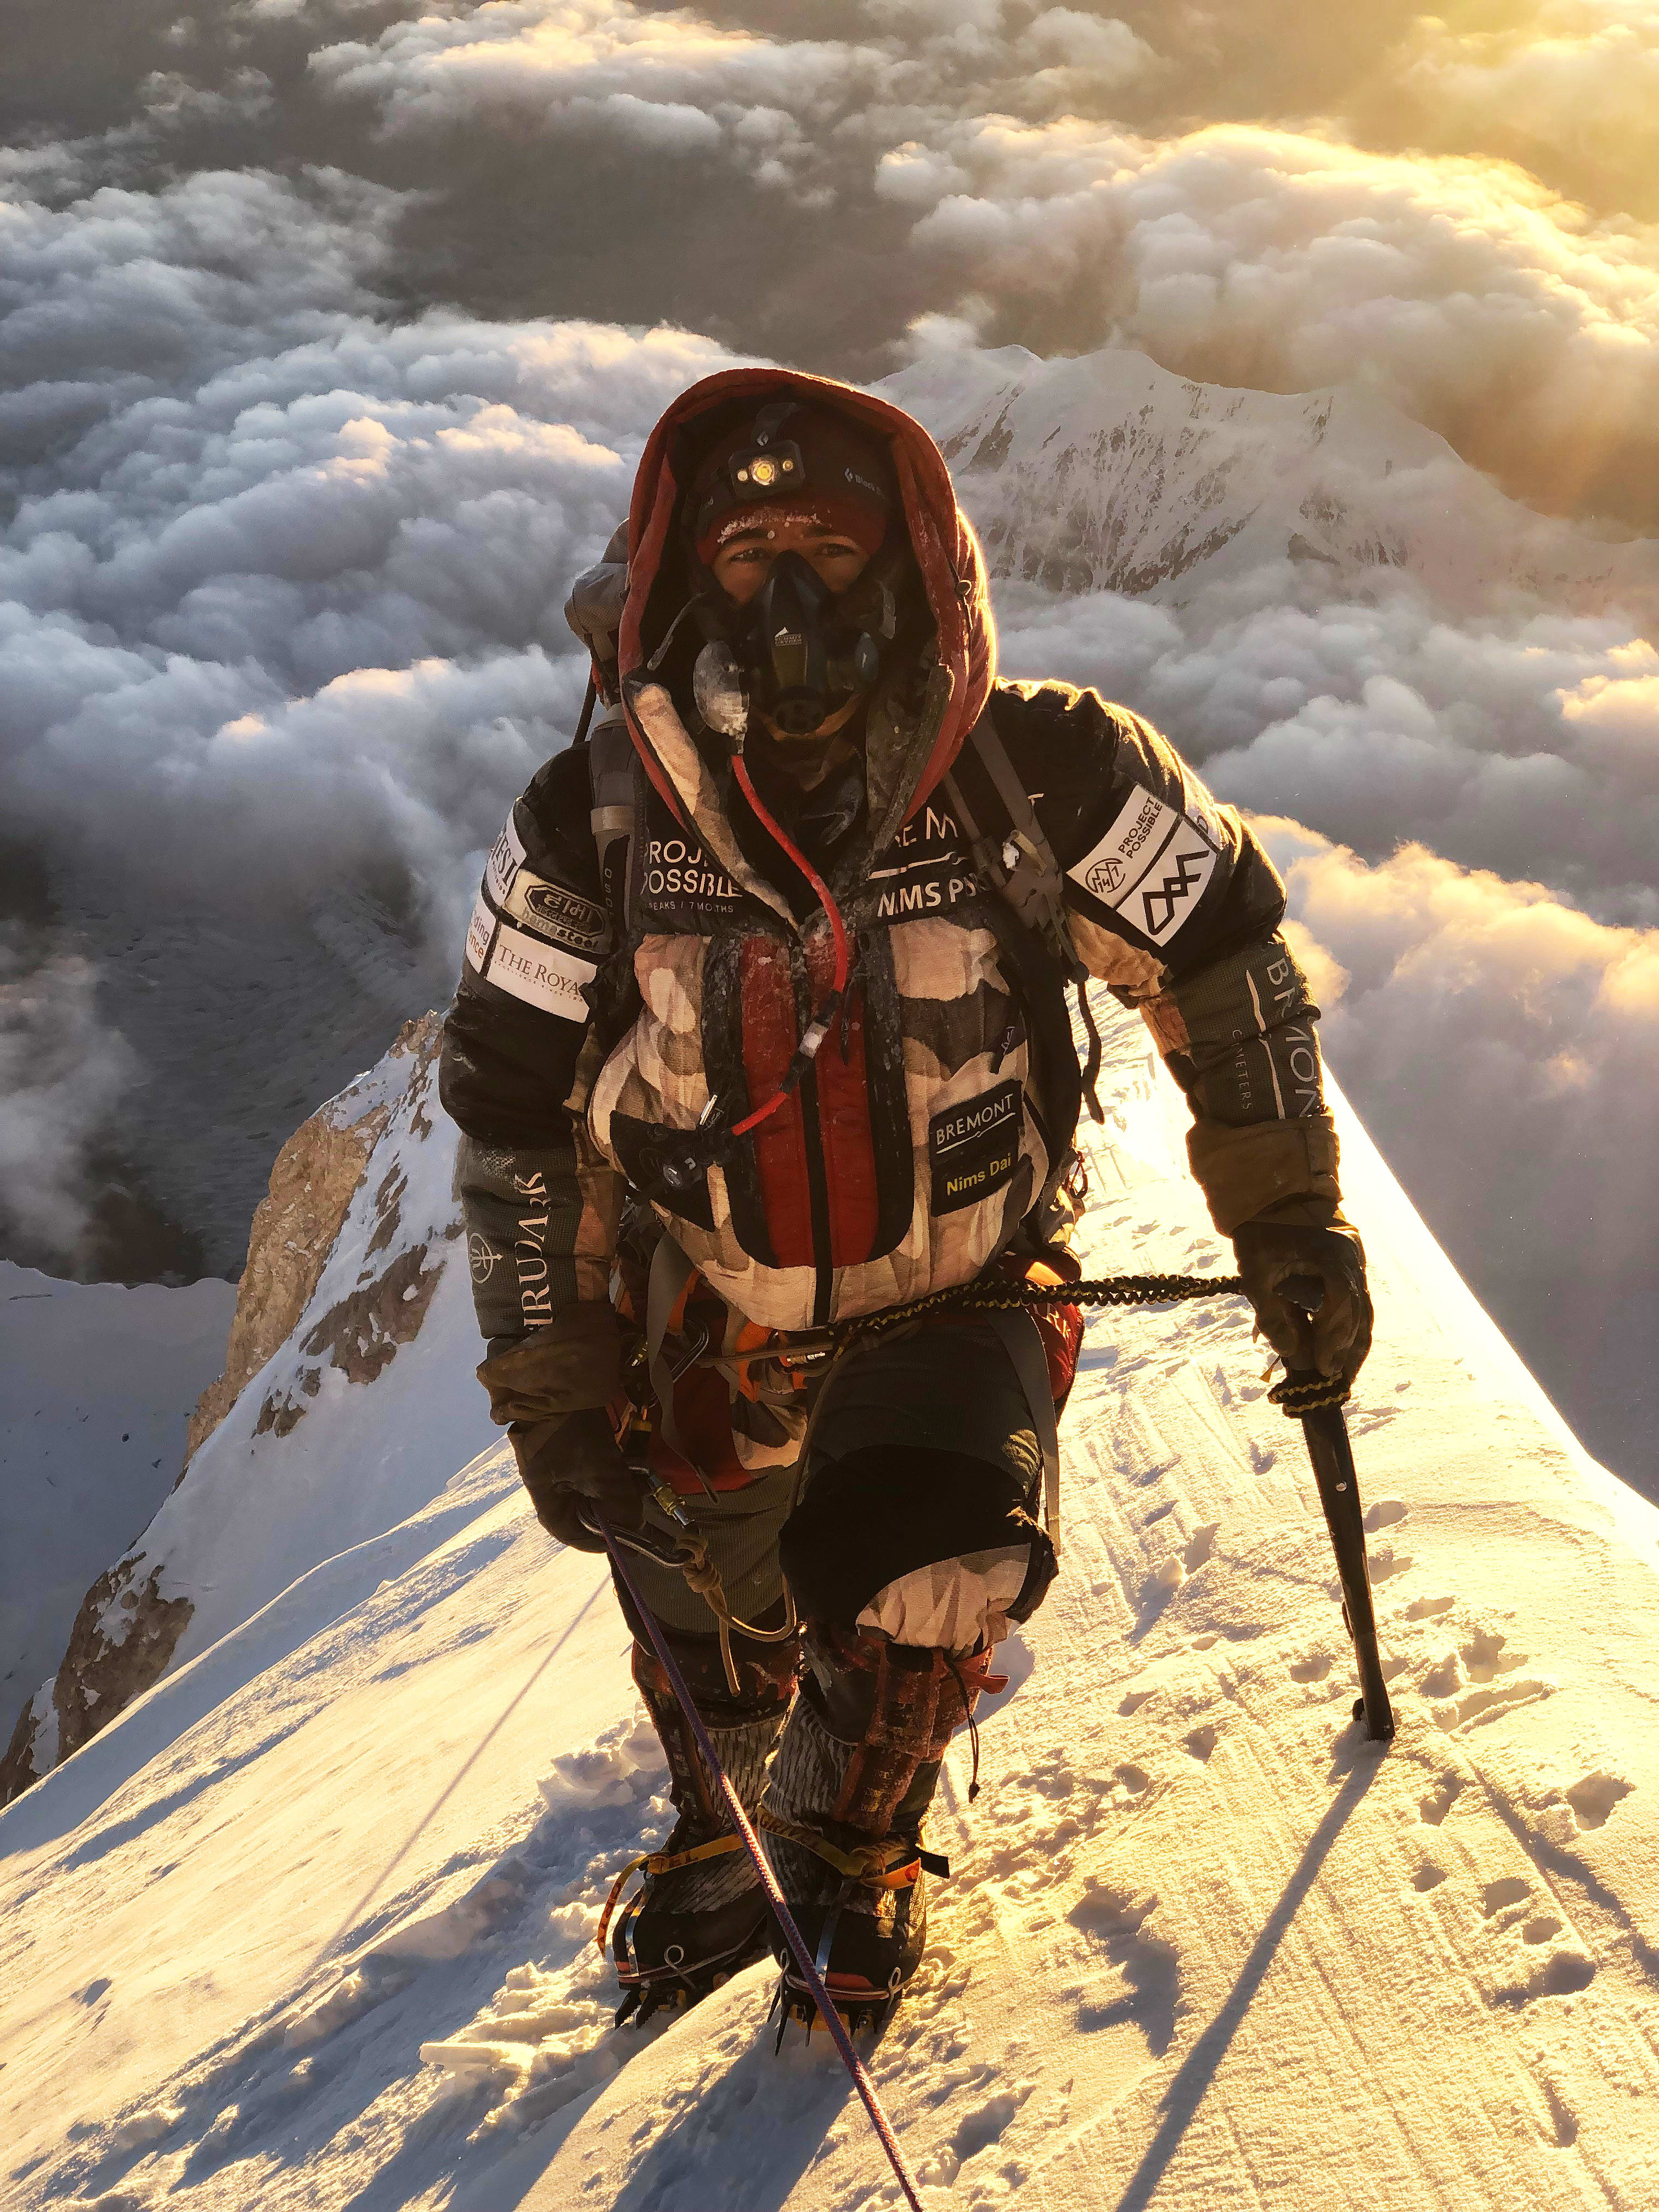 How ThruDark helped Nims Purja tame the highest summits